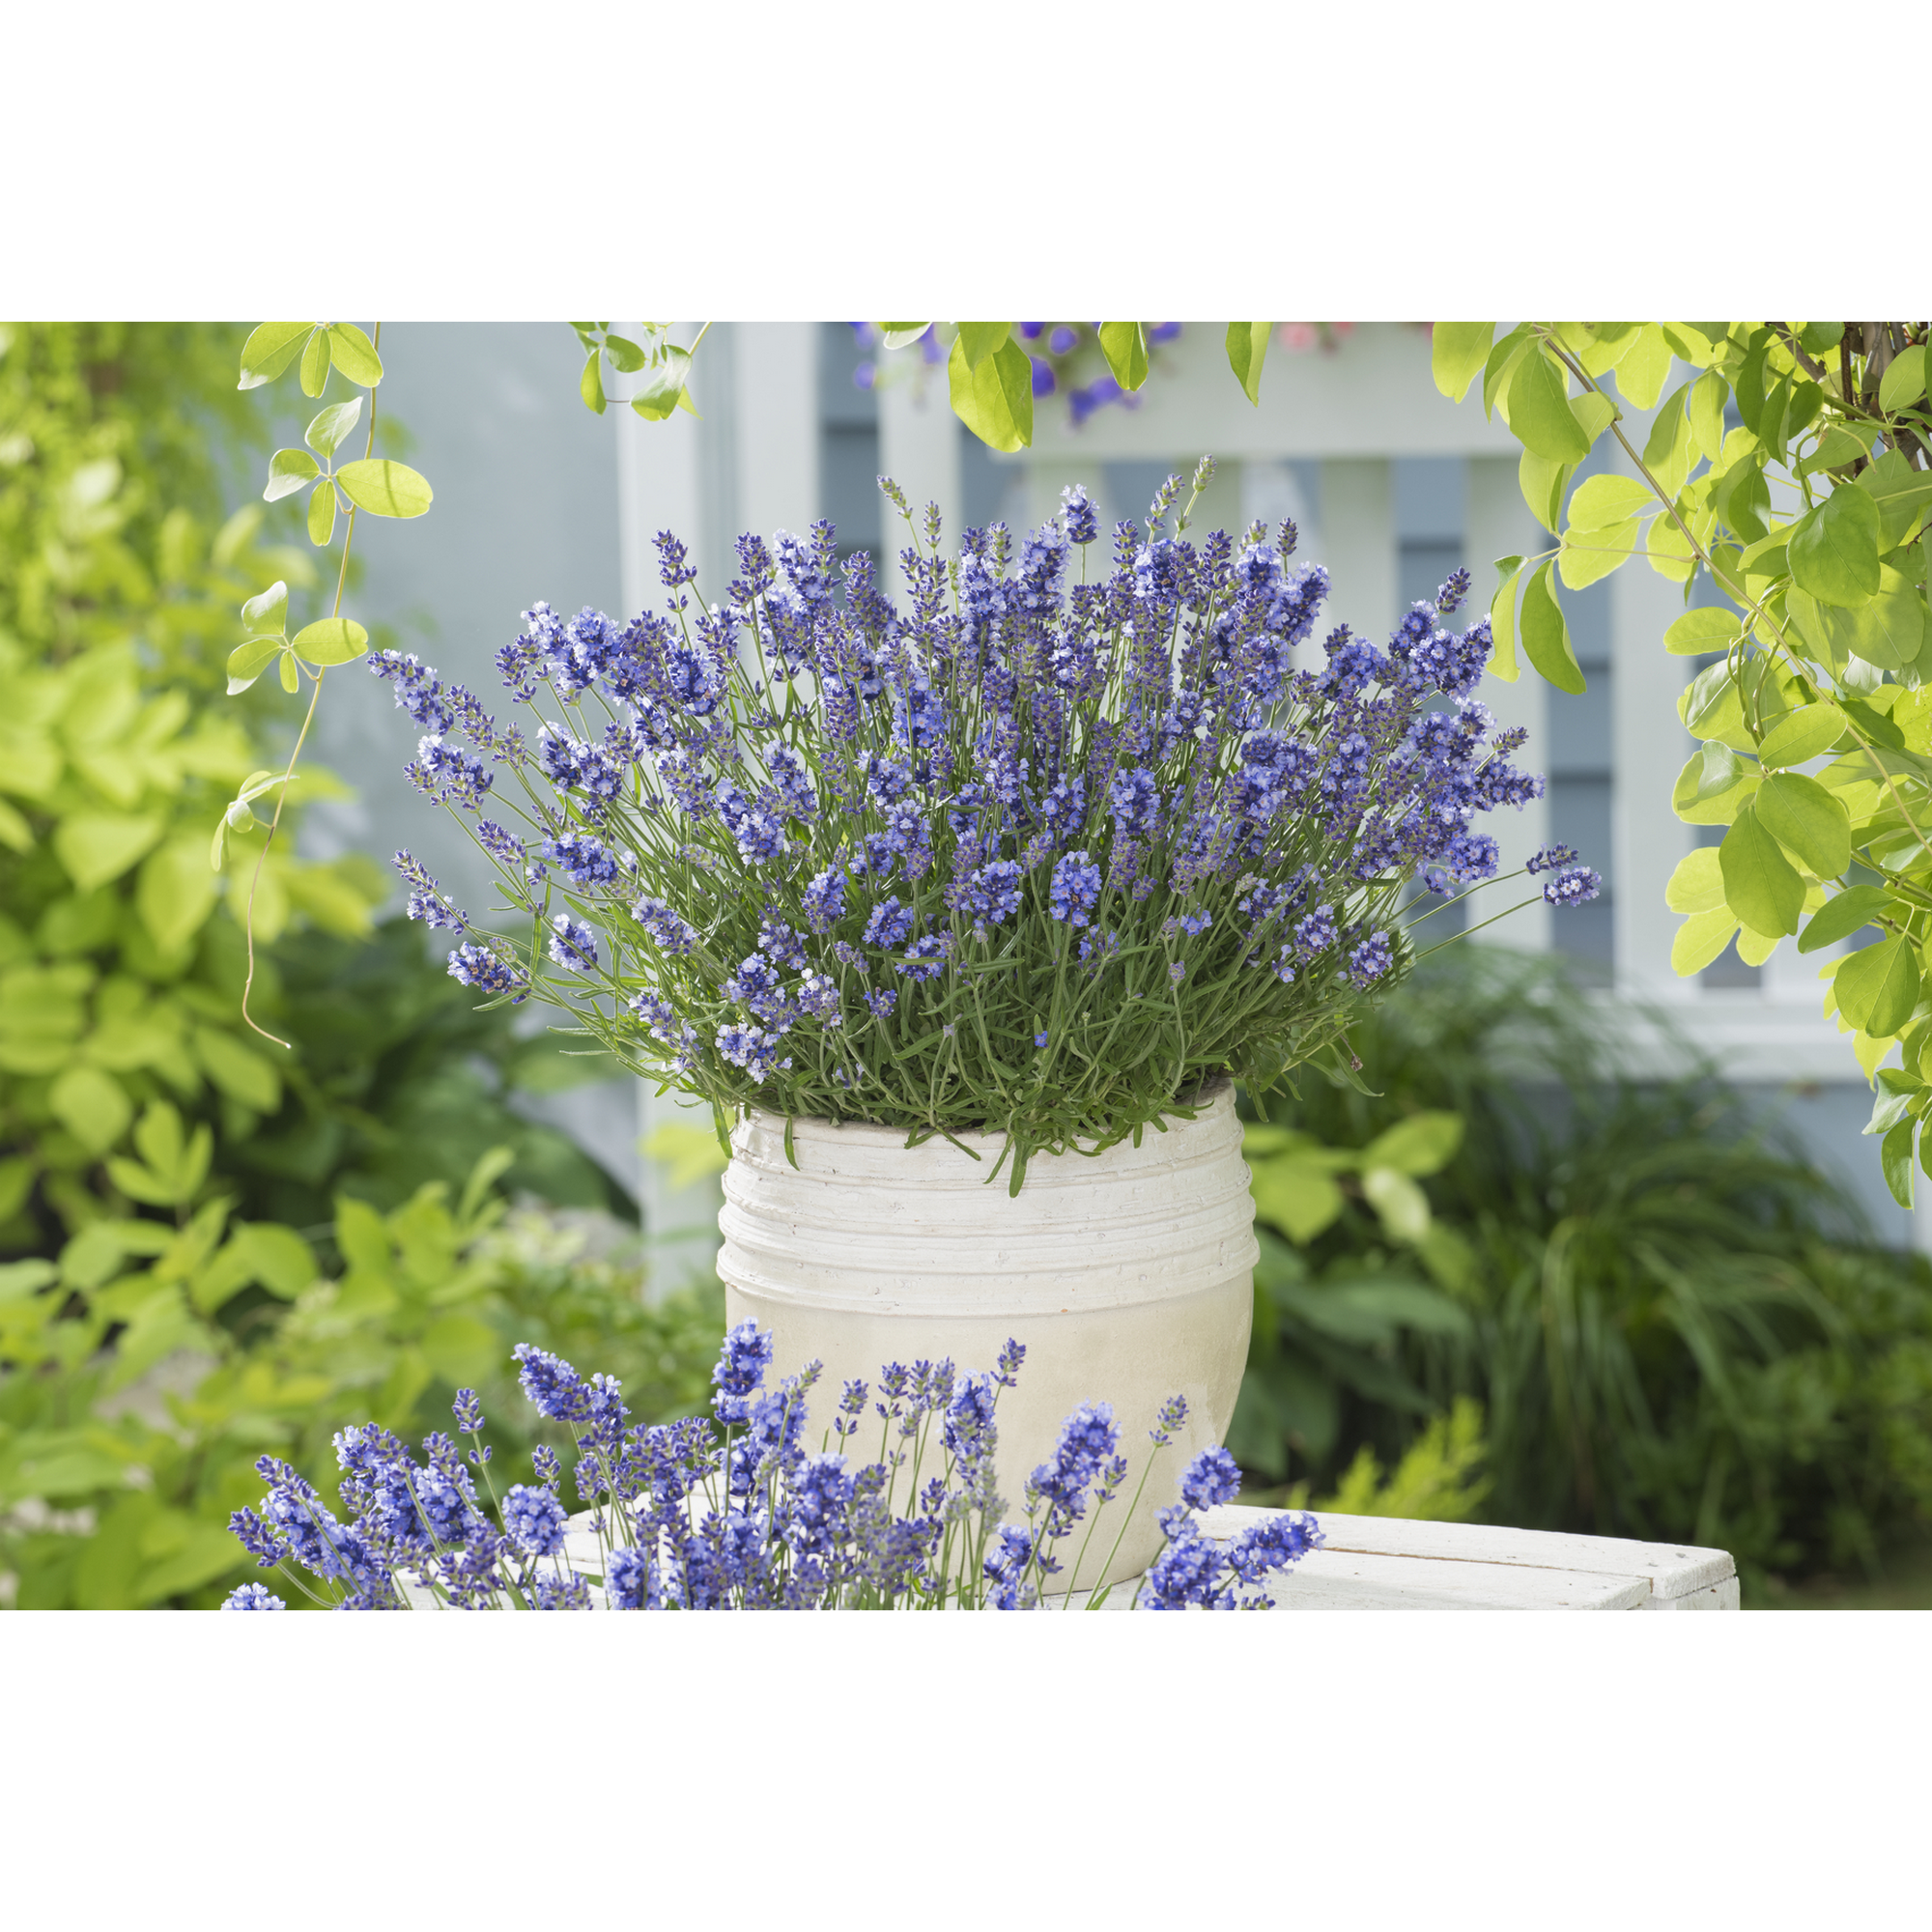 Lavendel 'Essence Purple' violett 15 cm Topf + product picture